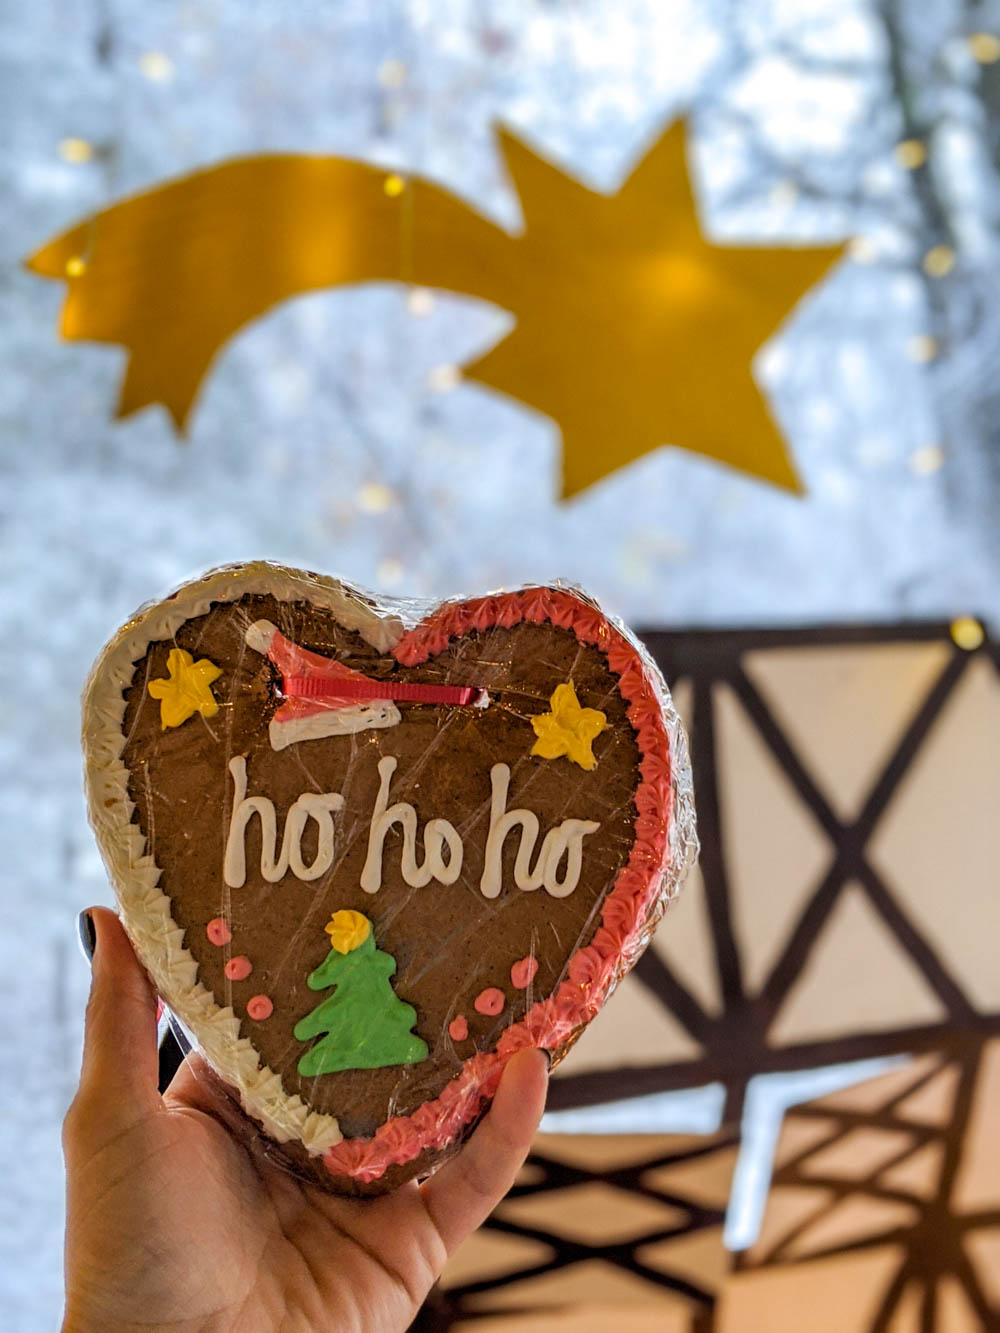 decorated lebkuchenherzen, gingerbread heart cookies